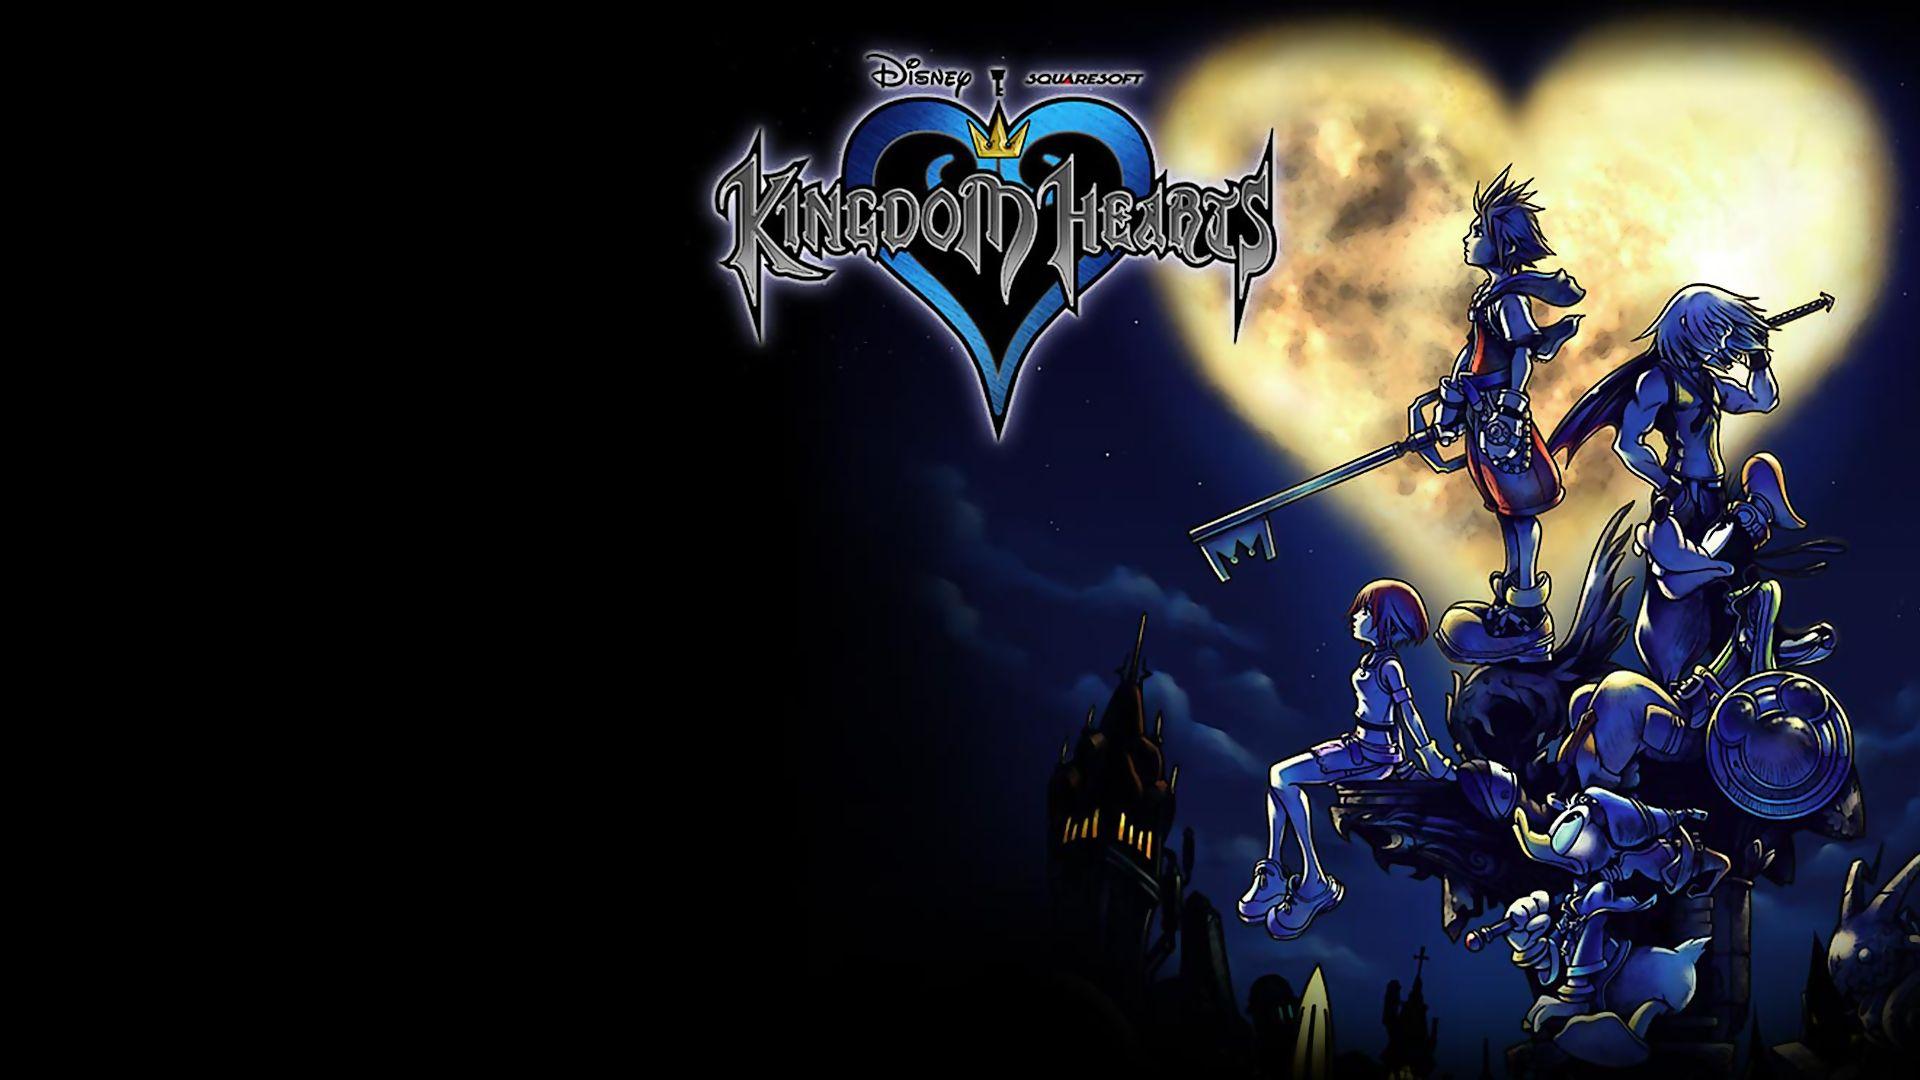 Kingdom Hearts Wallpaper HD Resolution. Kingdom hearts wallpaper